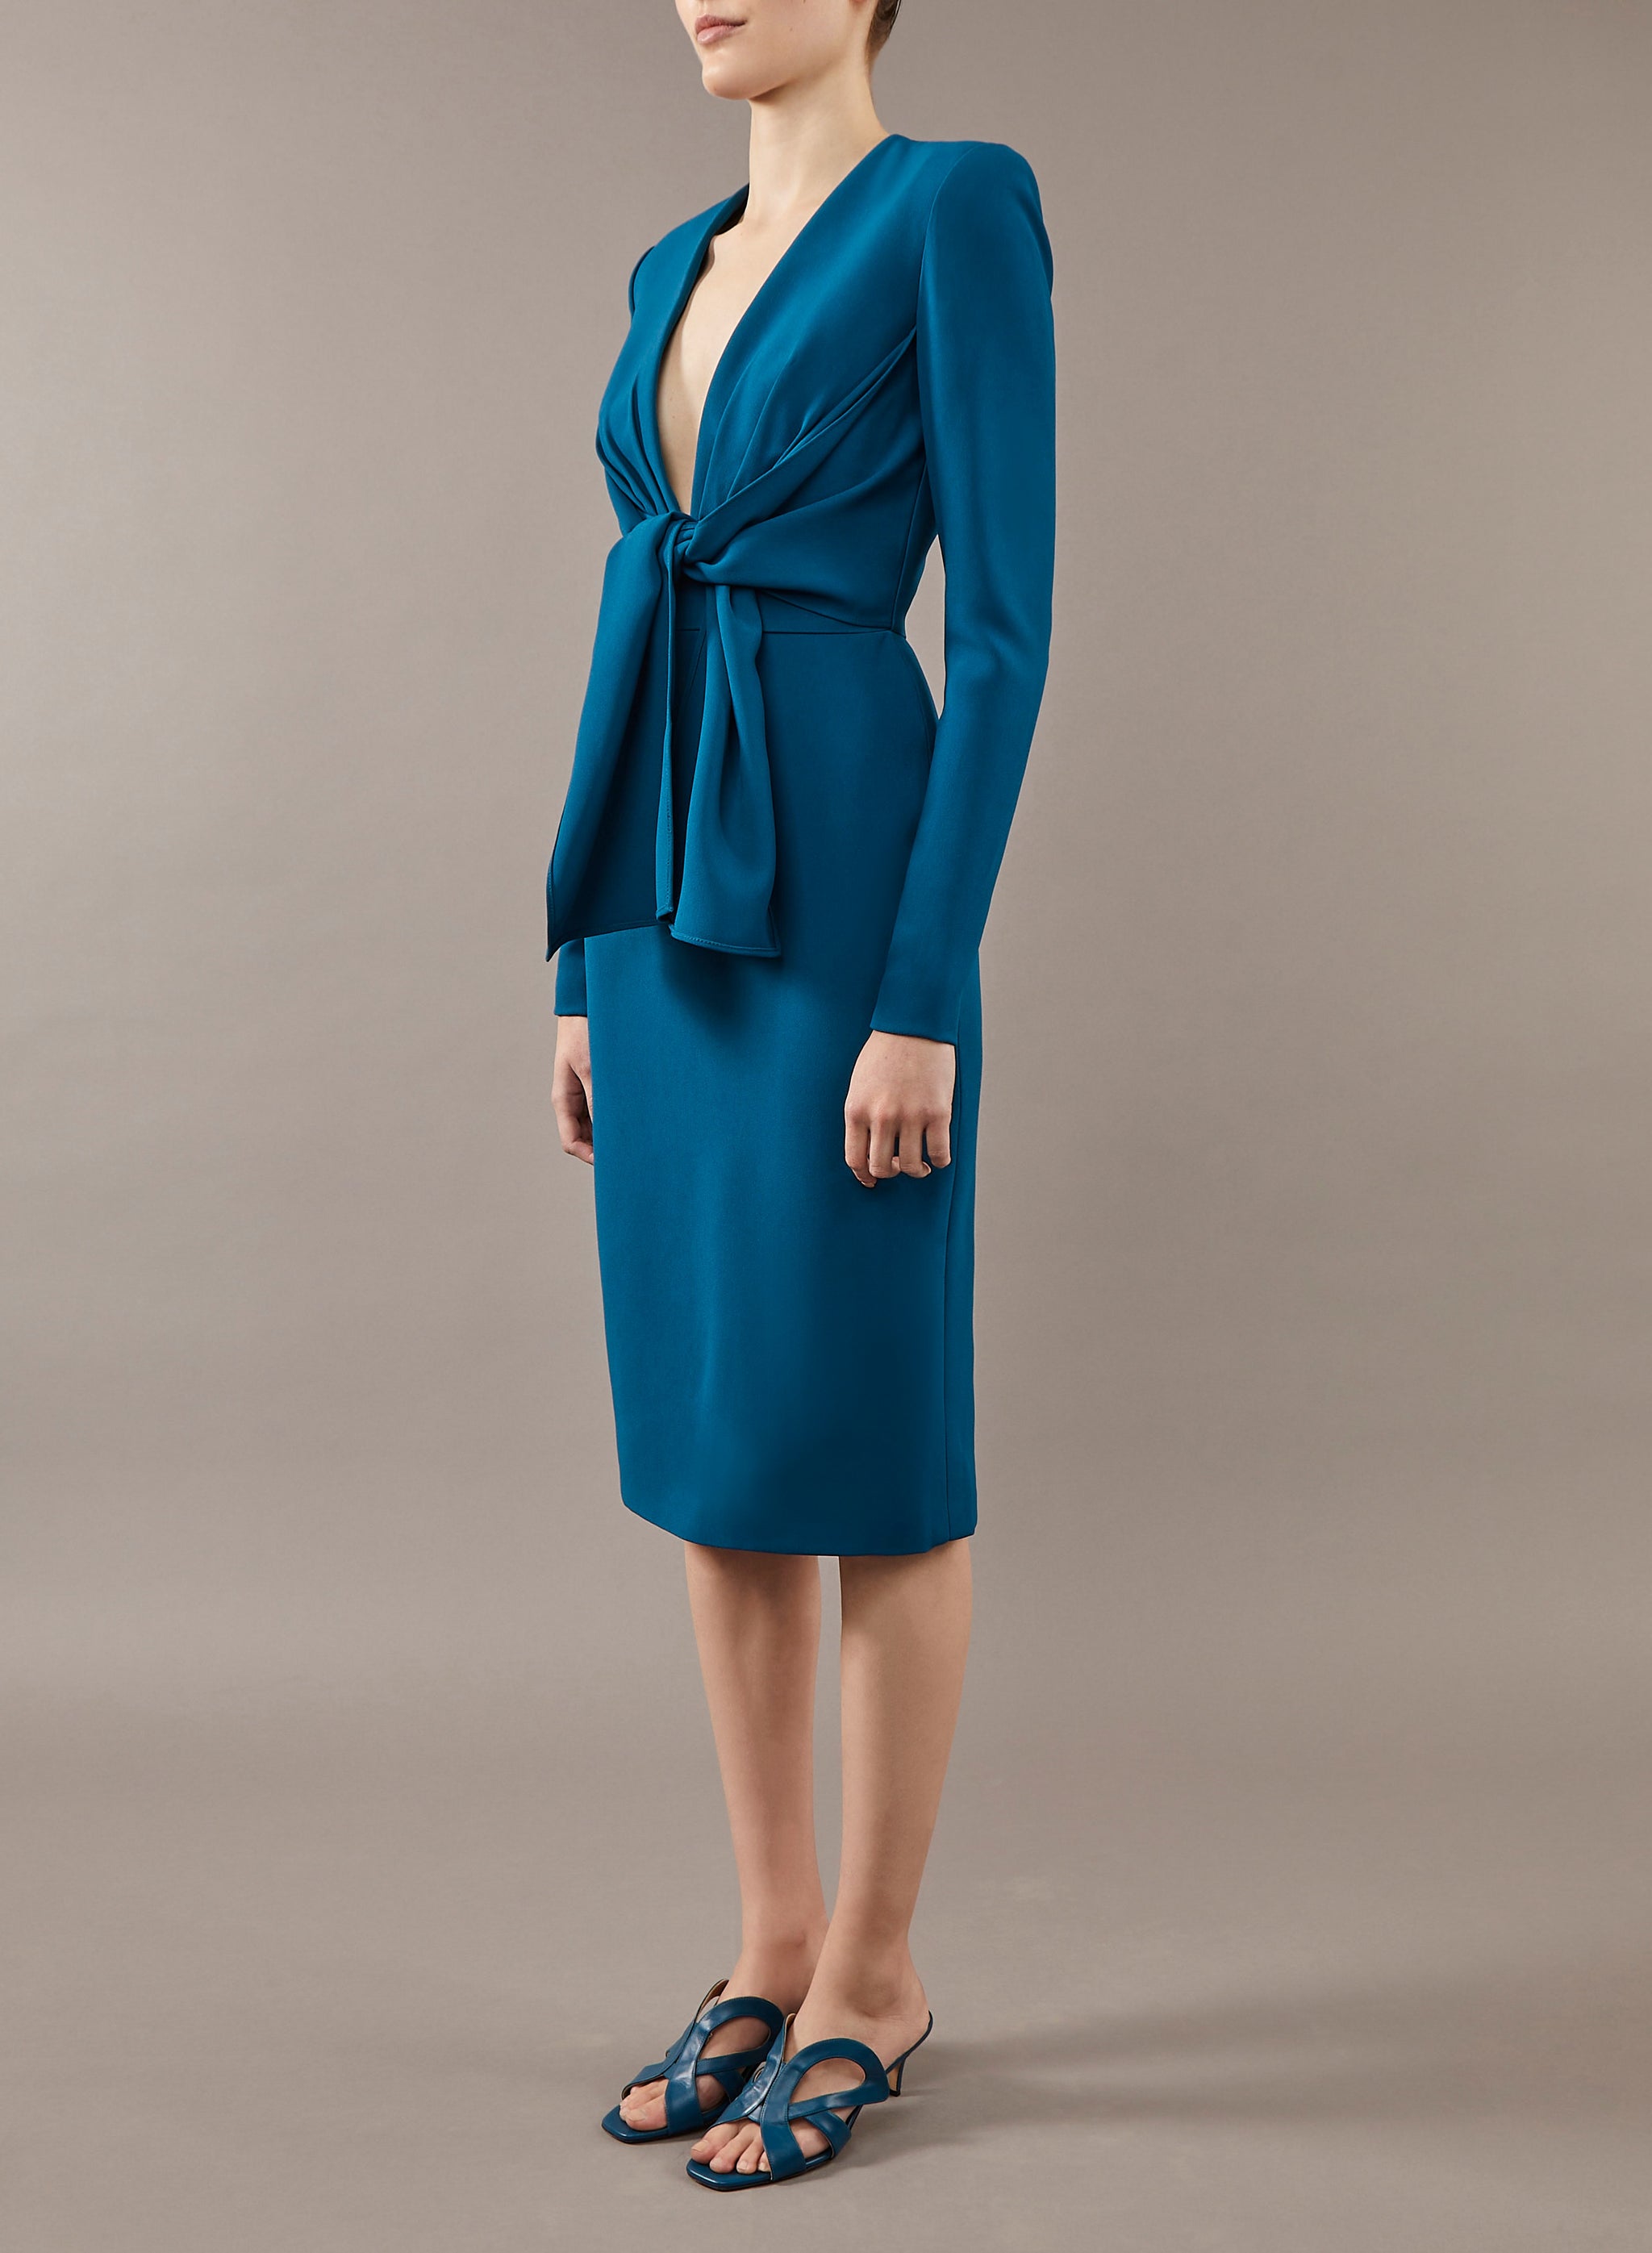 Designer Ready-to-Wear Dresses for Women - ELIE SAAB – Page 5 – Elie ...